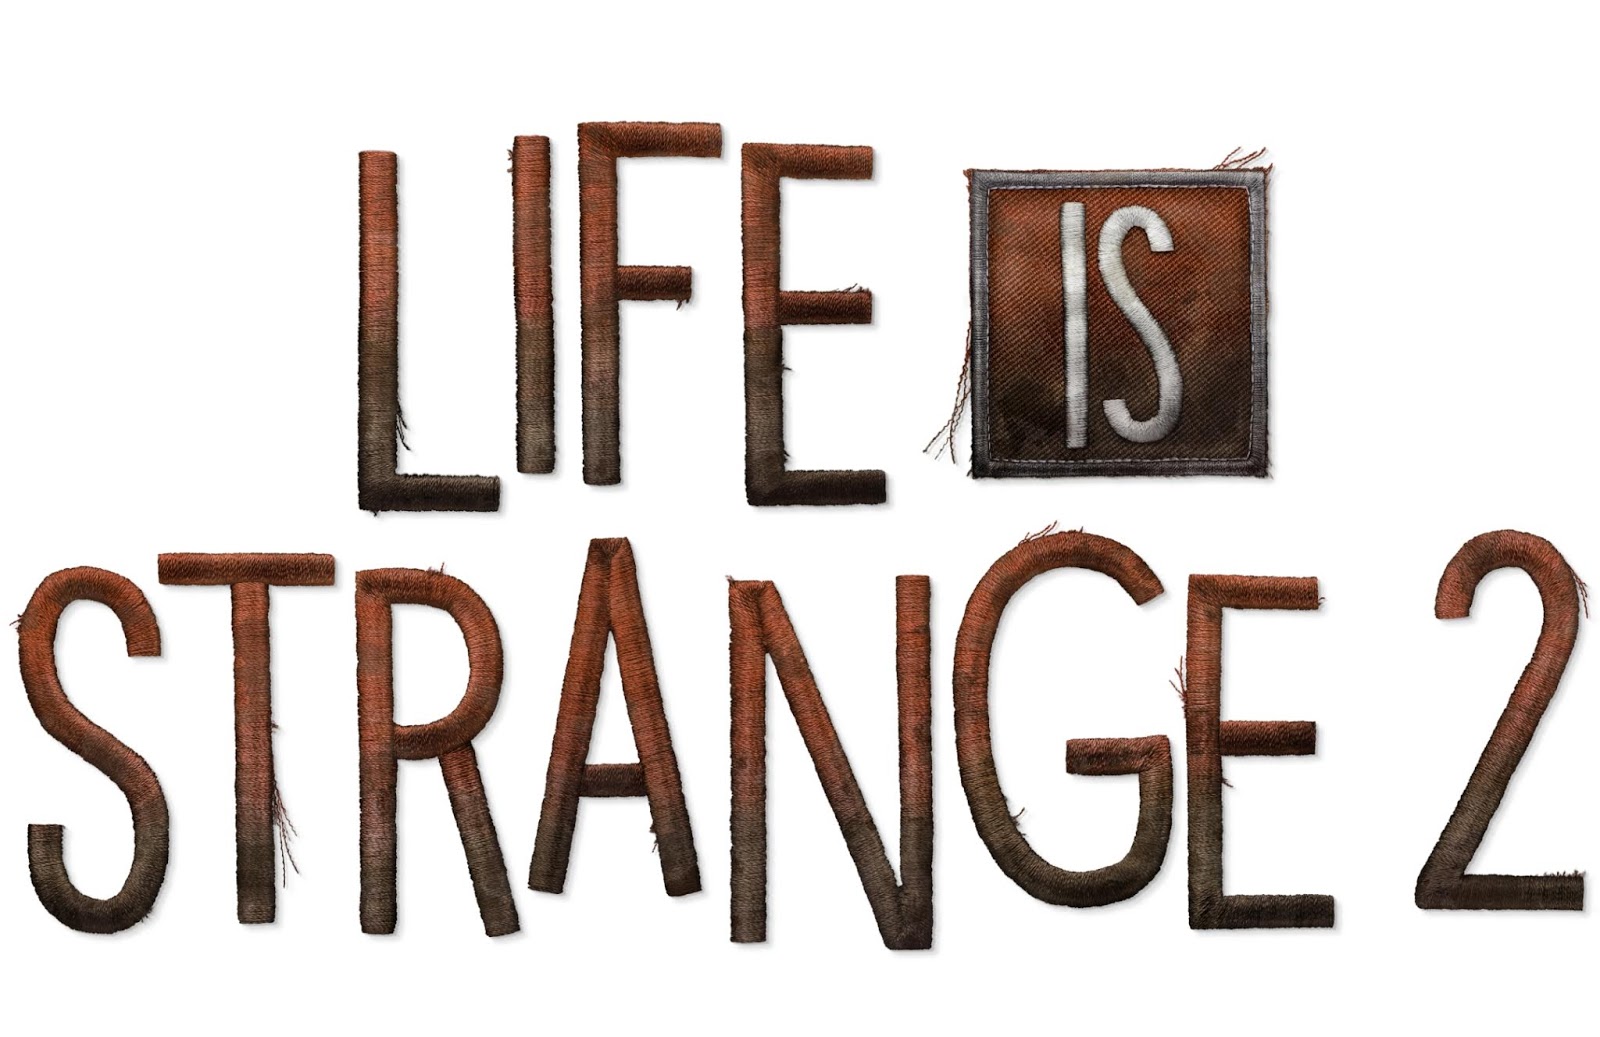 Life is warmed. Life is Strange логотип. Life is Strange 2 logo. Life is Strange 2 эпизод 1 лого. Life is Strange надпись.